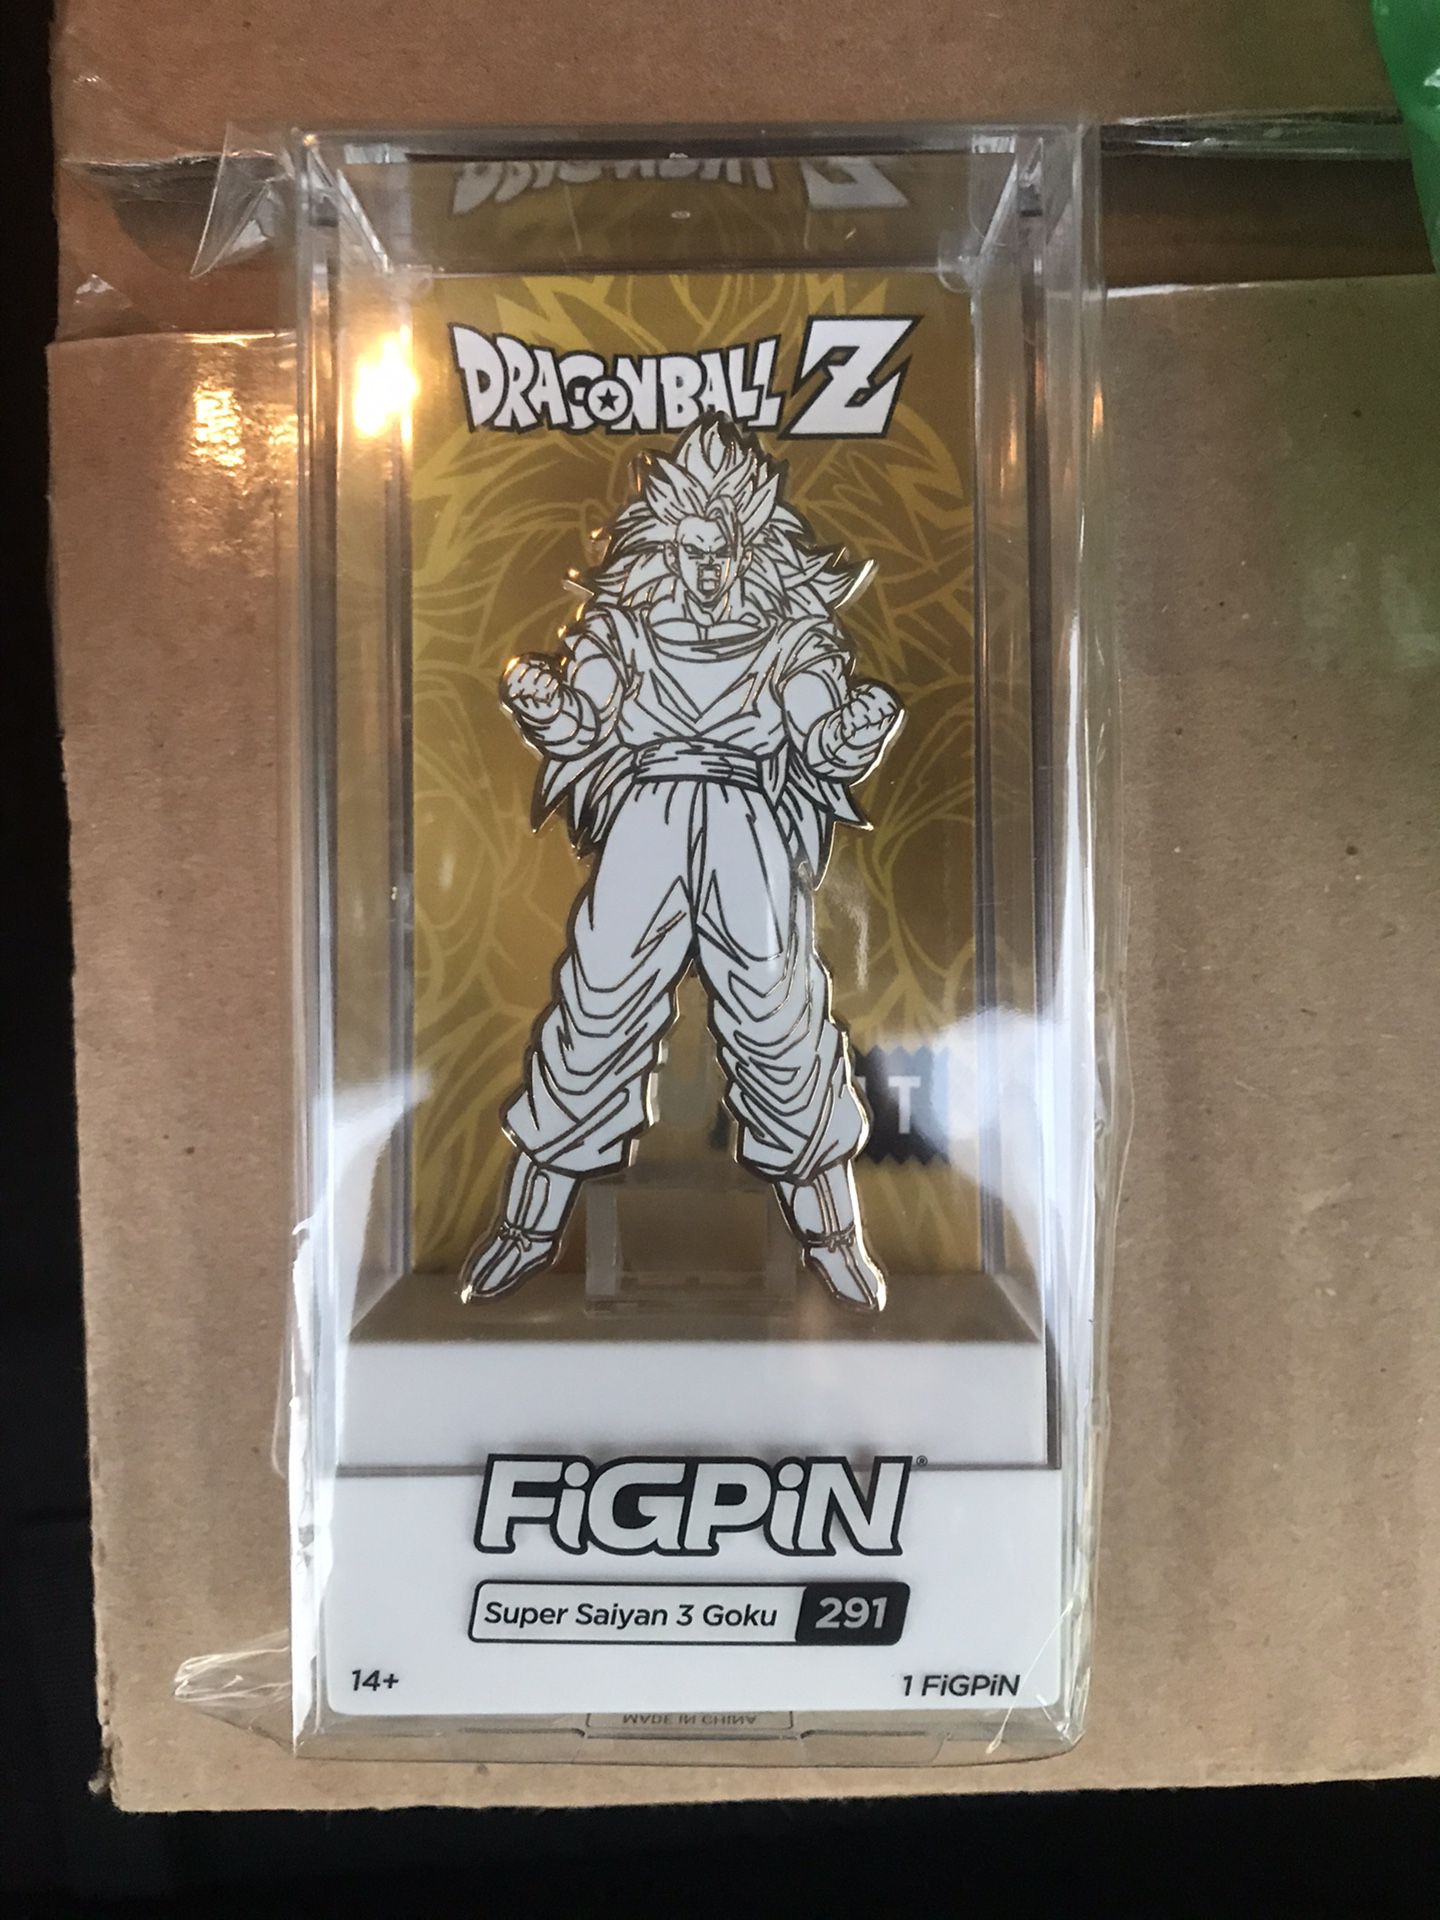 FiGPiN Dragonball Z Super Saiyan 3 Goku NYCC Exclusive 1 of 1000 Limited